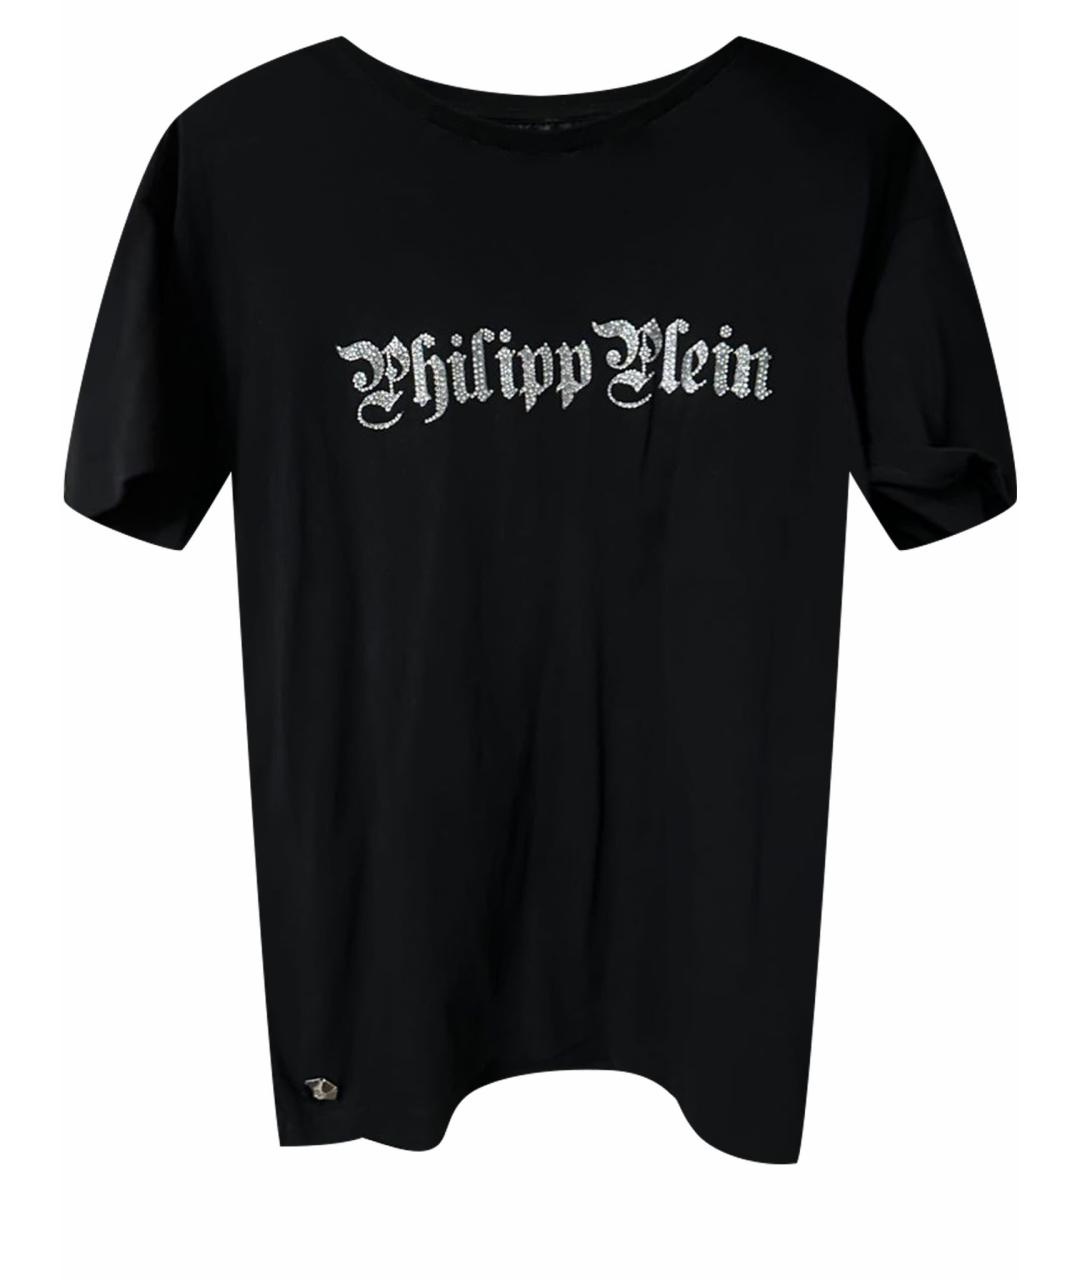 PHILIPP PLEIN Черная хлопковая футболка, фото 1